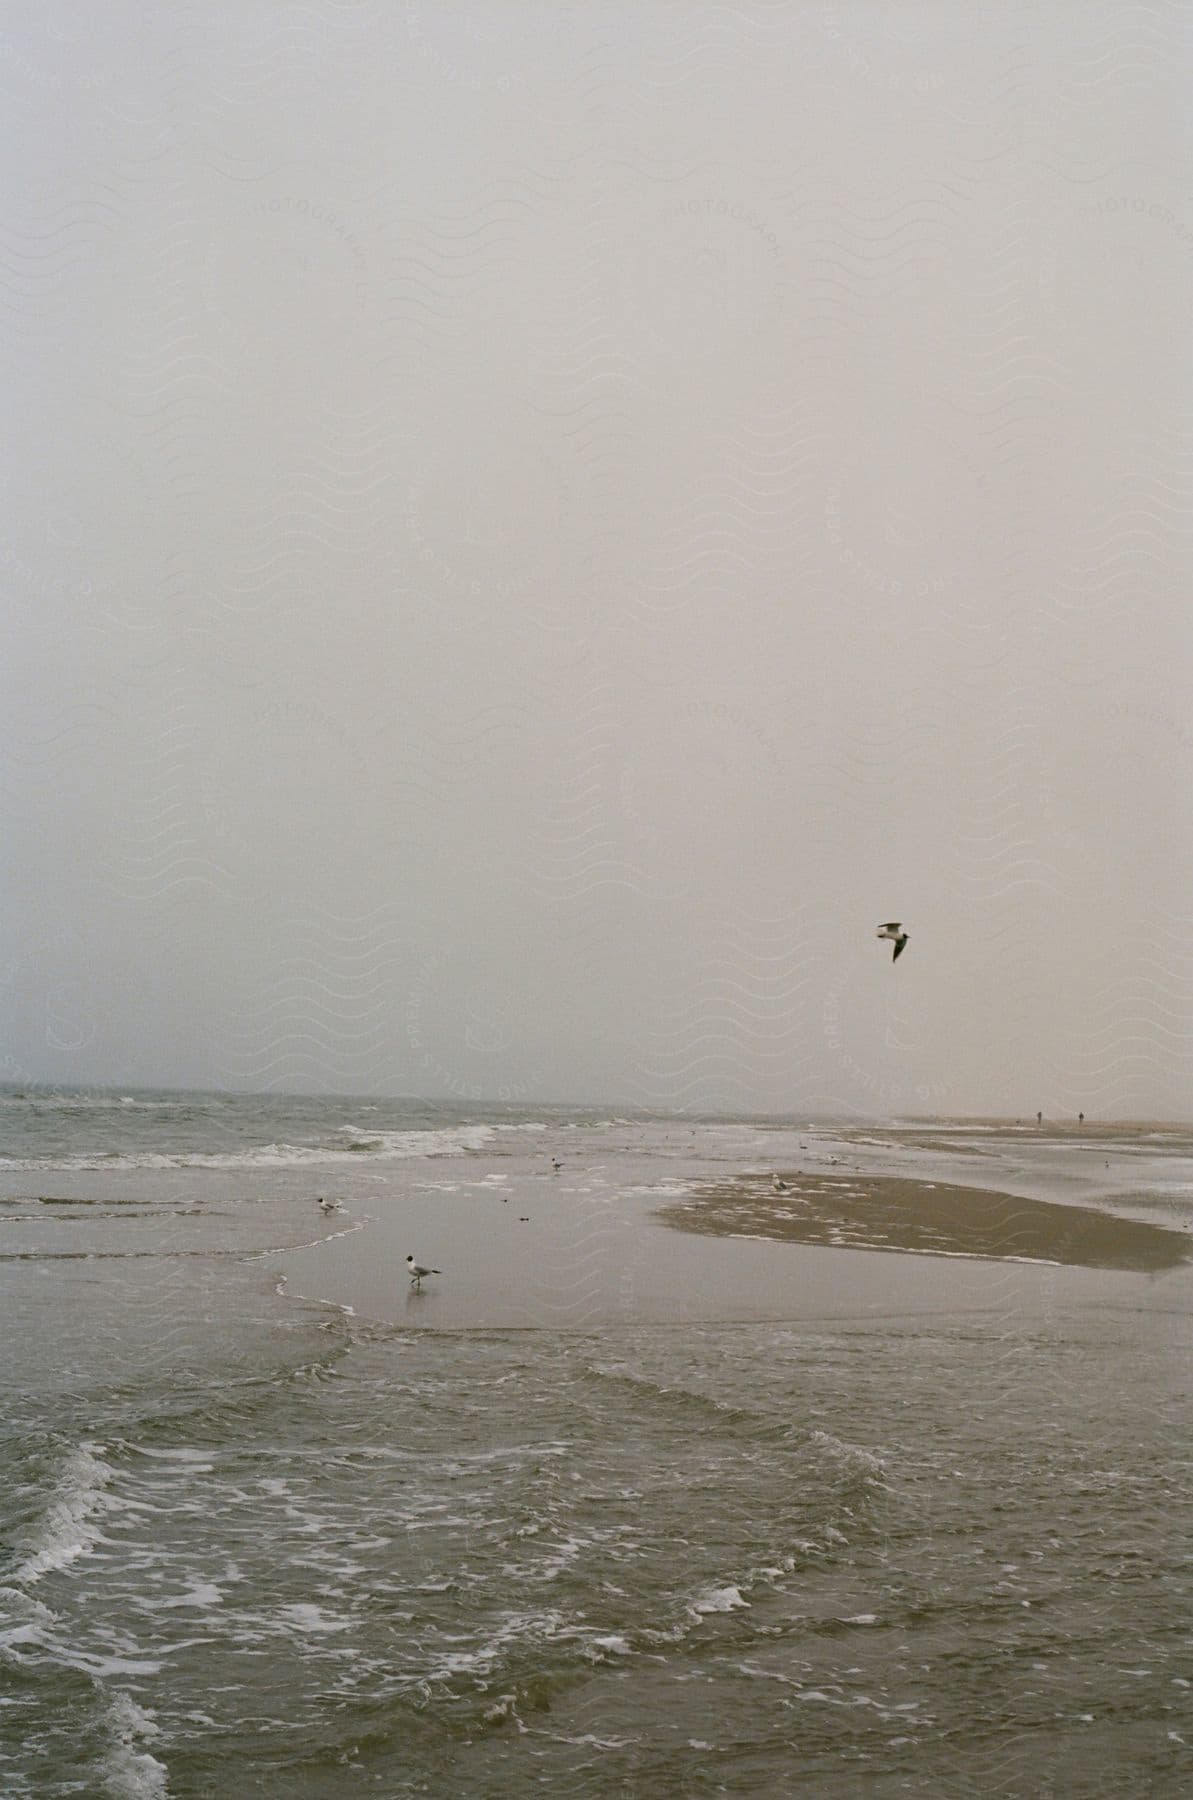 Waves wash upon a sandy beach as a seagull flies overhead under a gray sky.